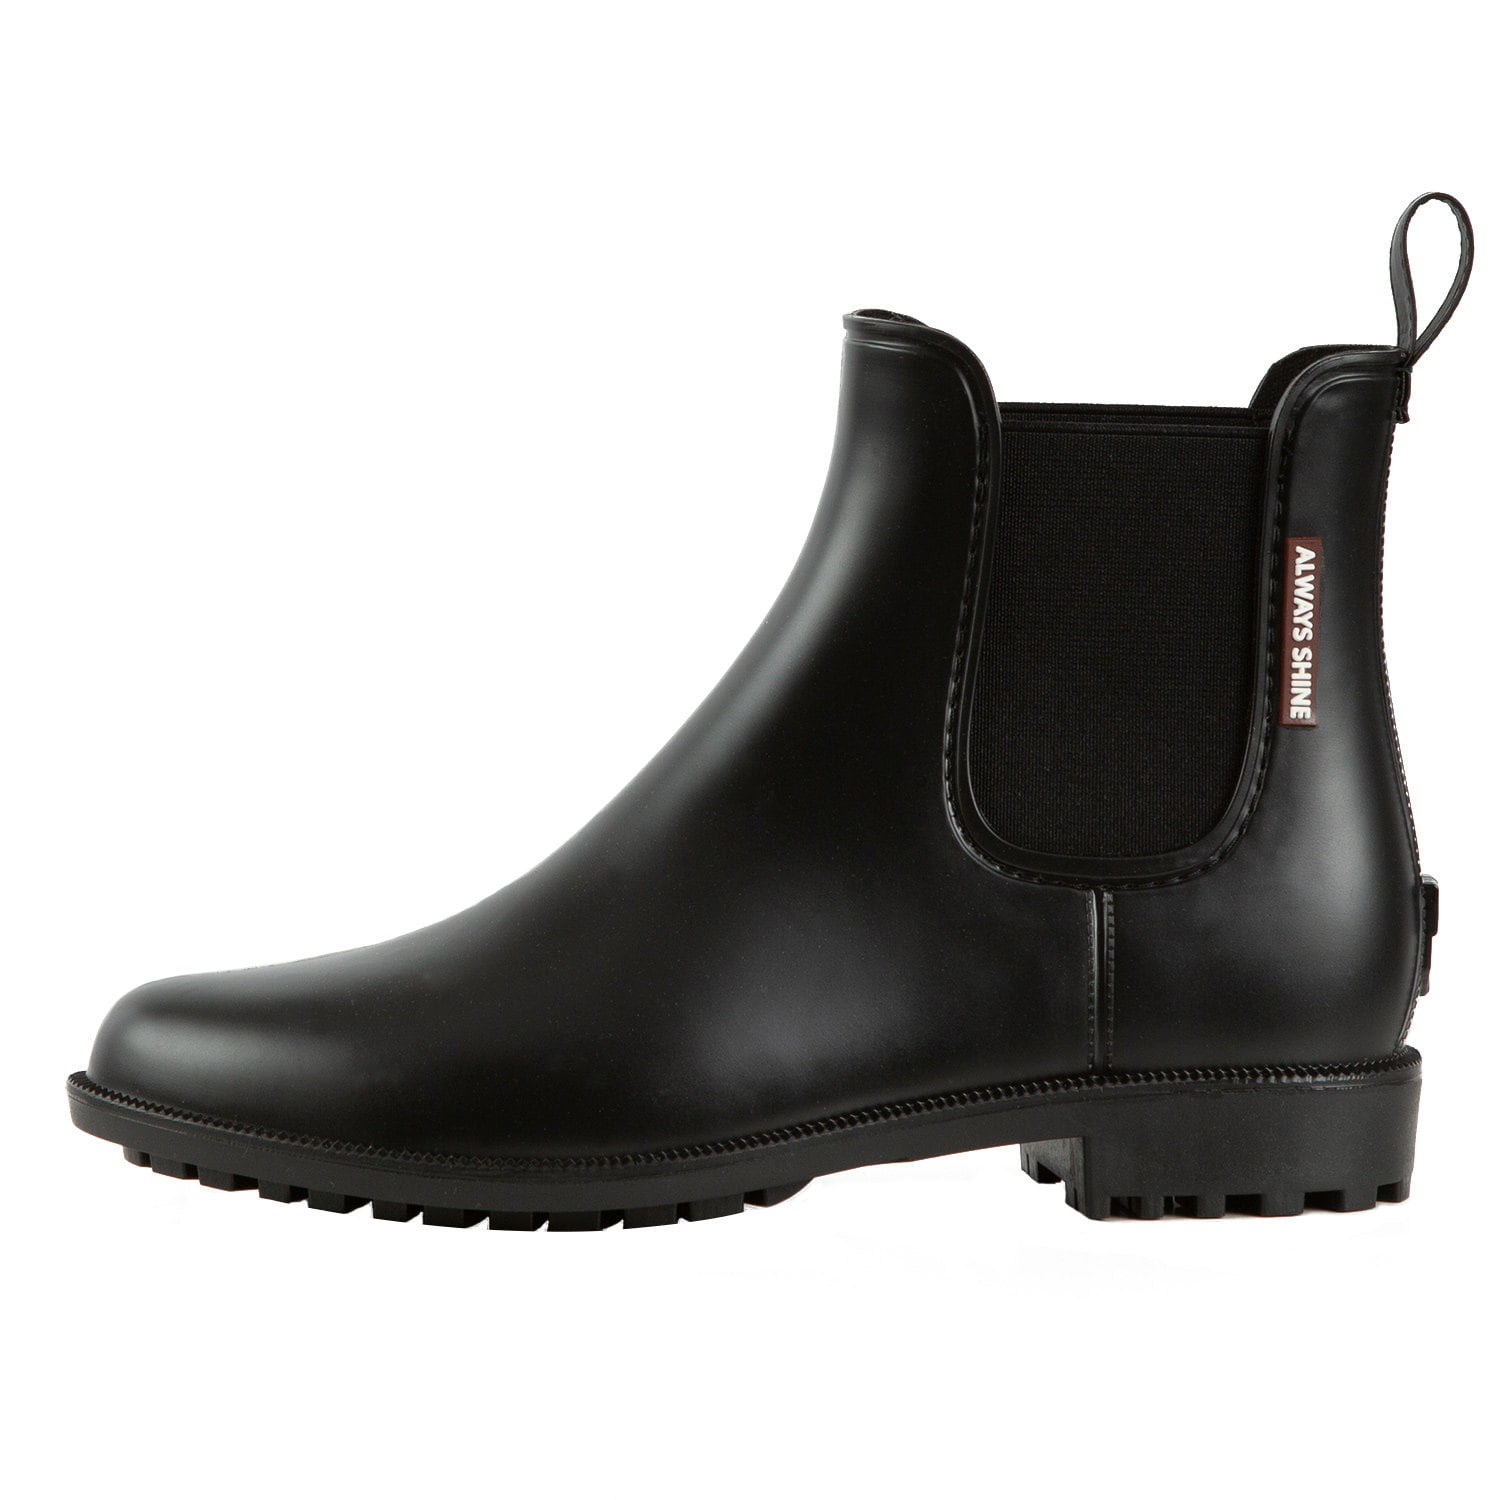 Planone Short rain boots for women and waterproof garden shoes anti ...